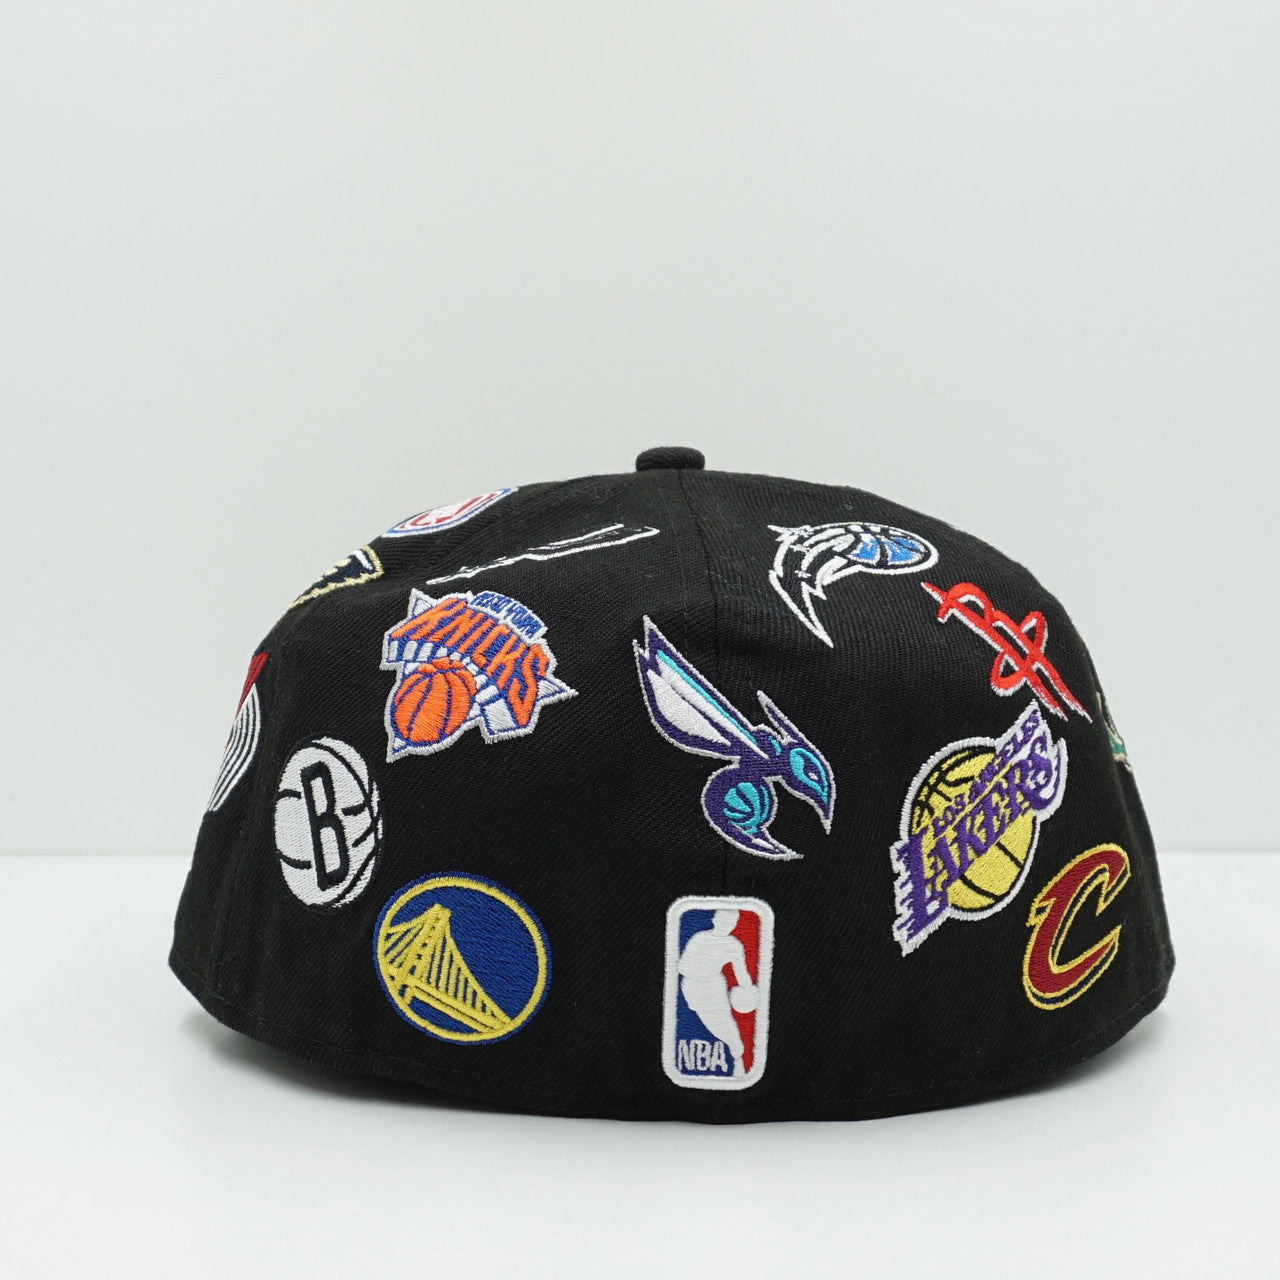 New Era NBA Logos Fitted Cap